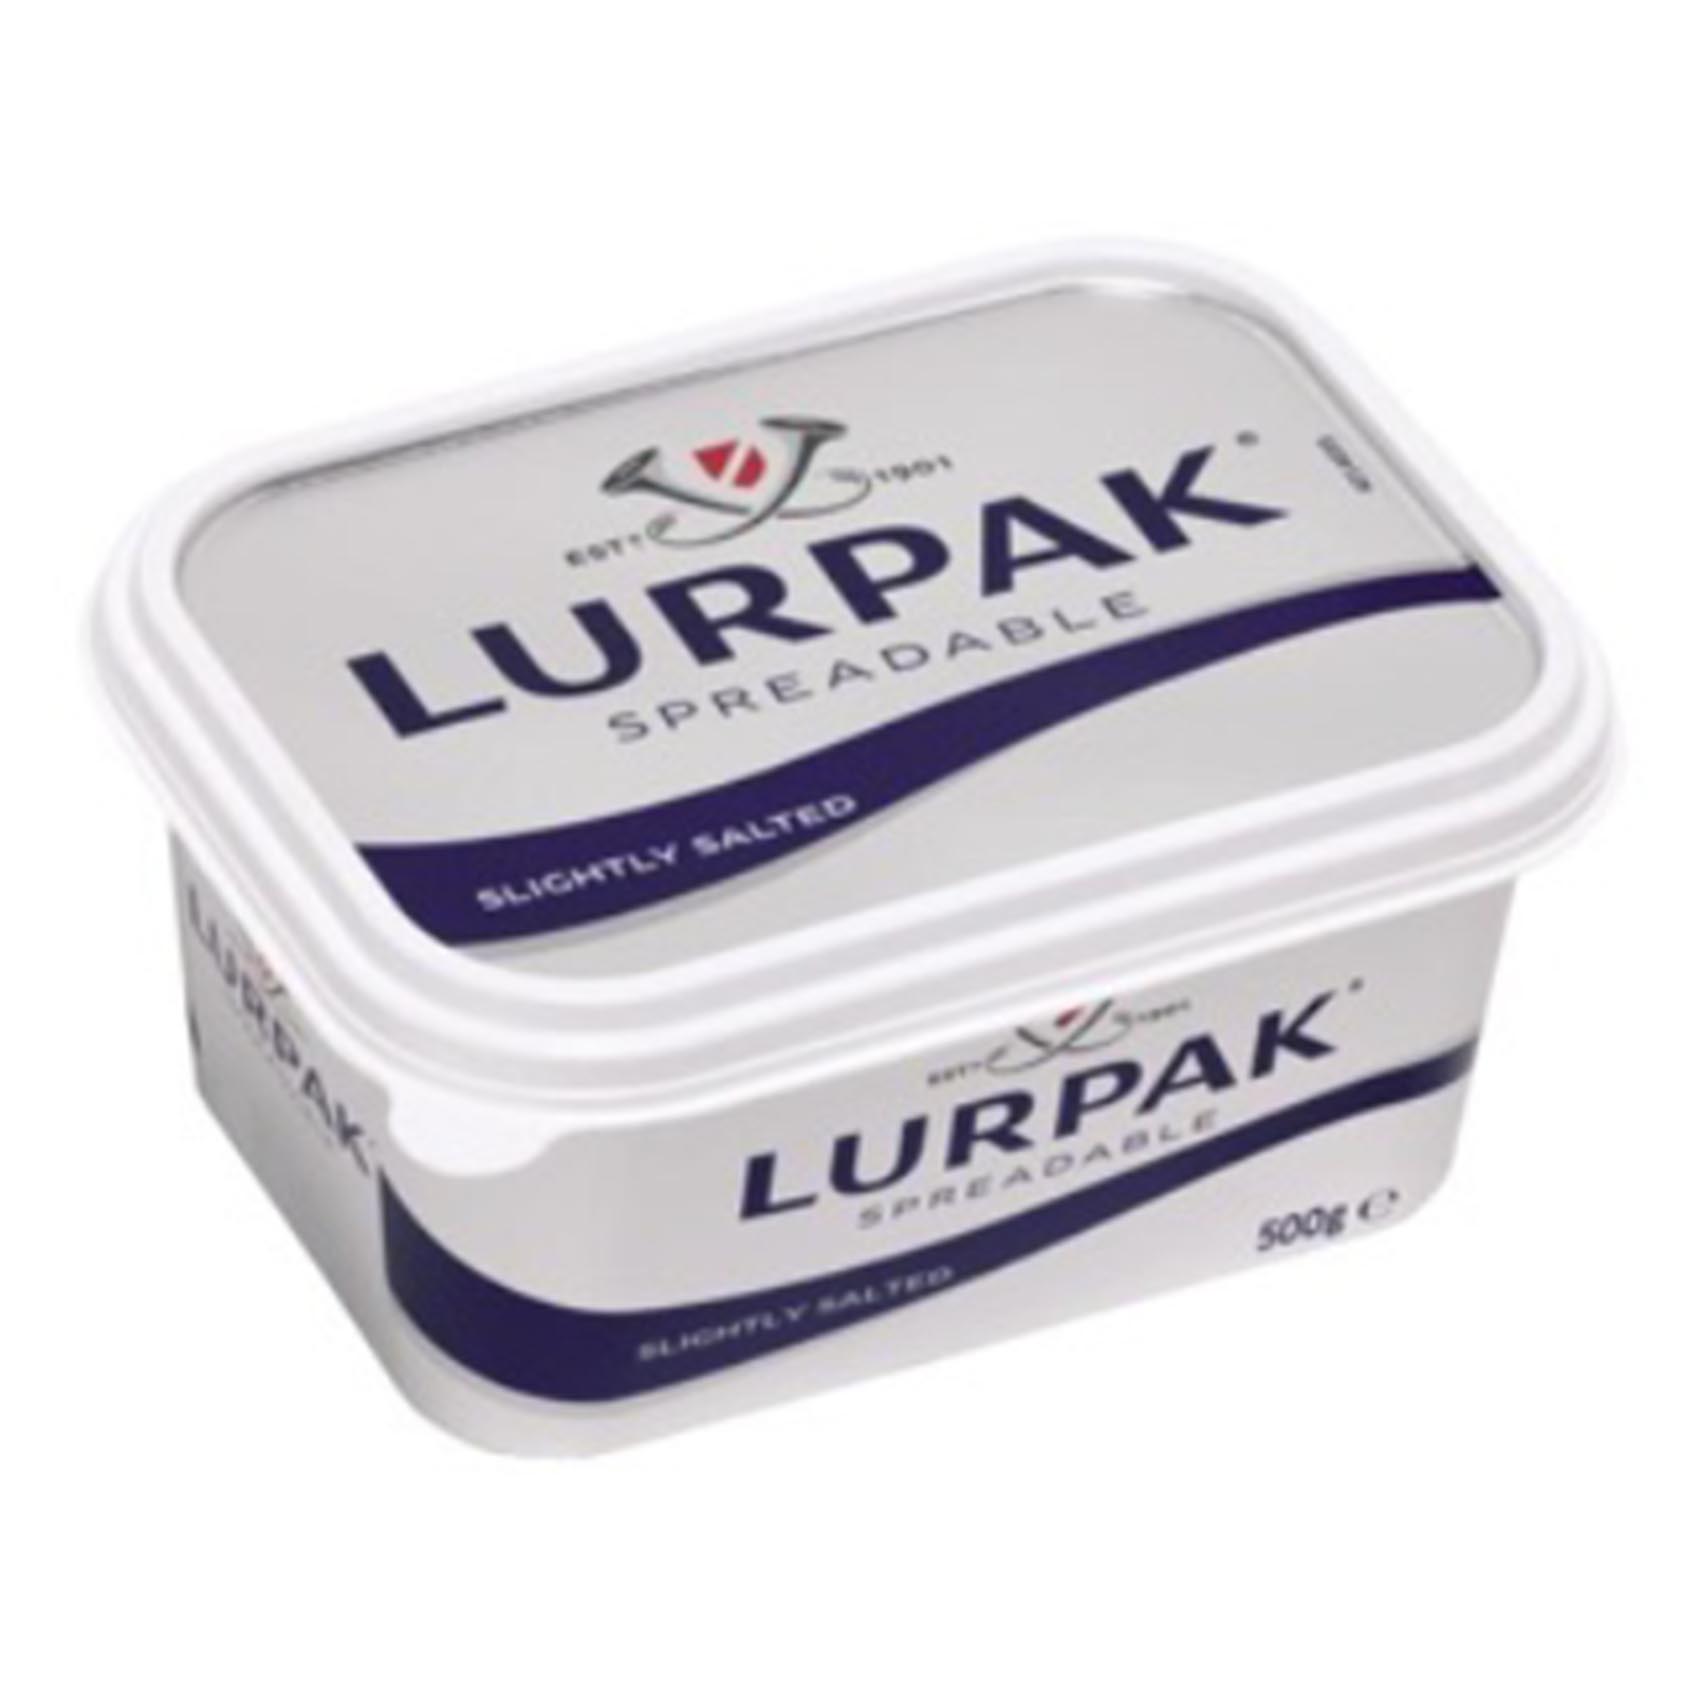 Lurpak Salted Spreadable Butter 500G